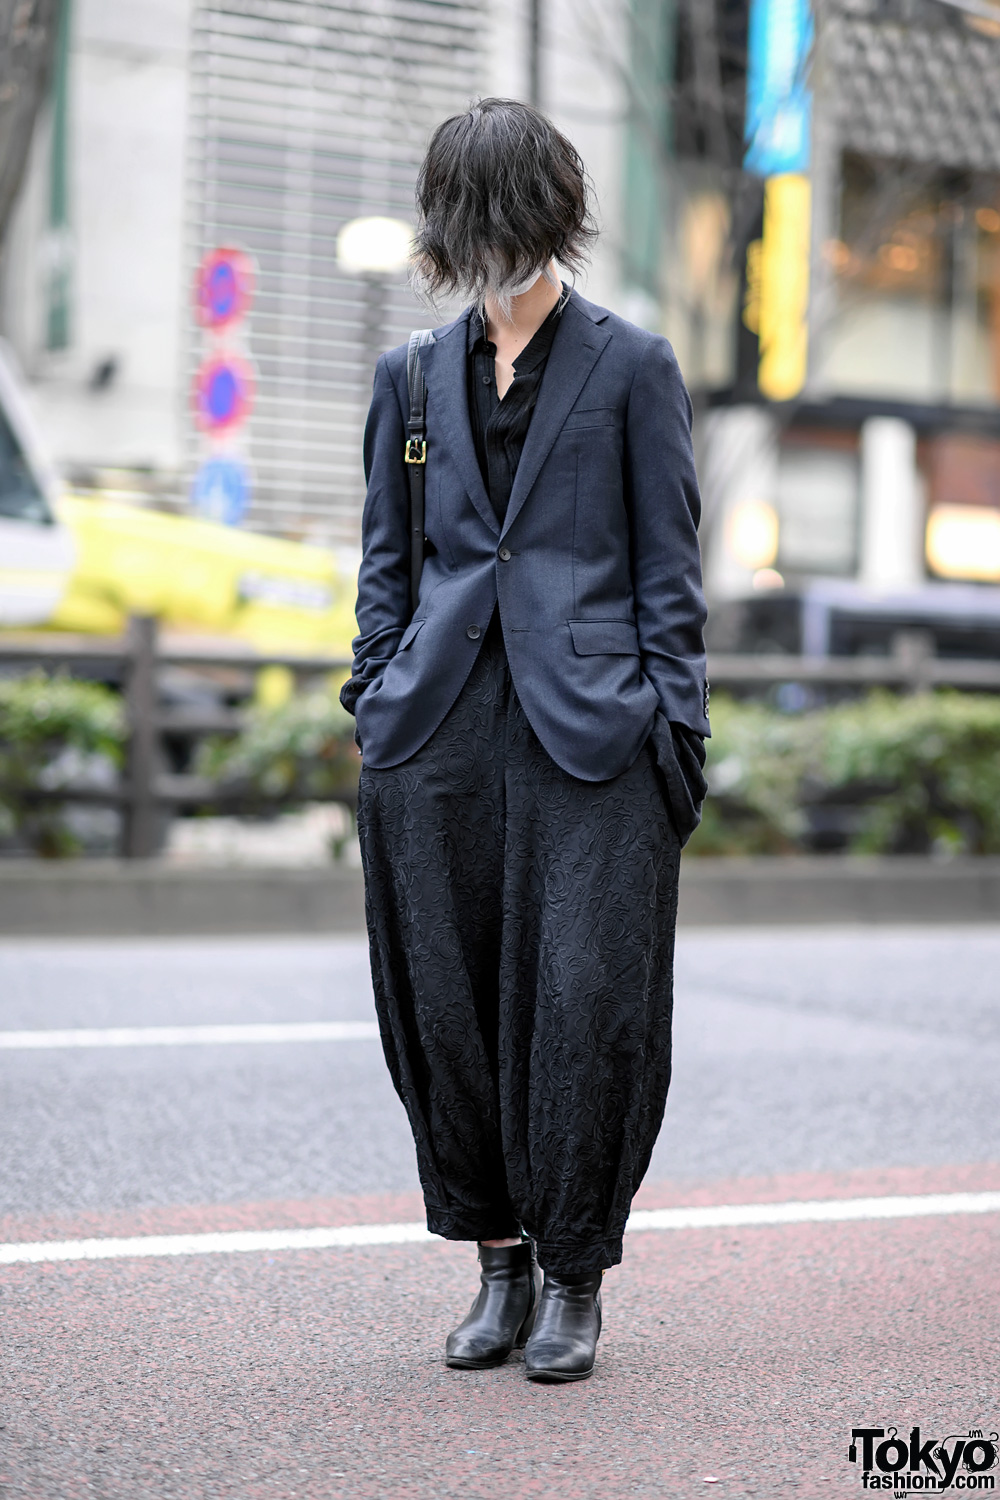 Harajuku Guy w/ Long In Front Hairstyle, Kujaku, Roggy Kei & Vintage Fashion